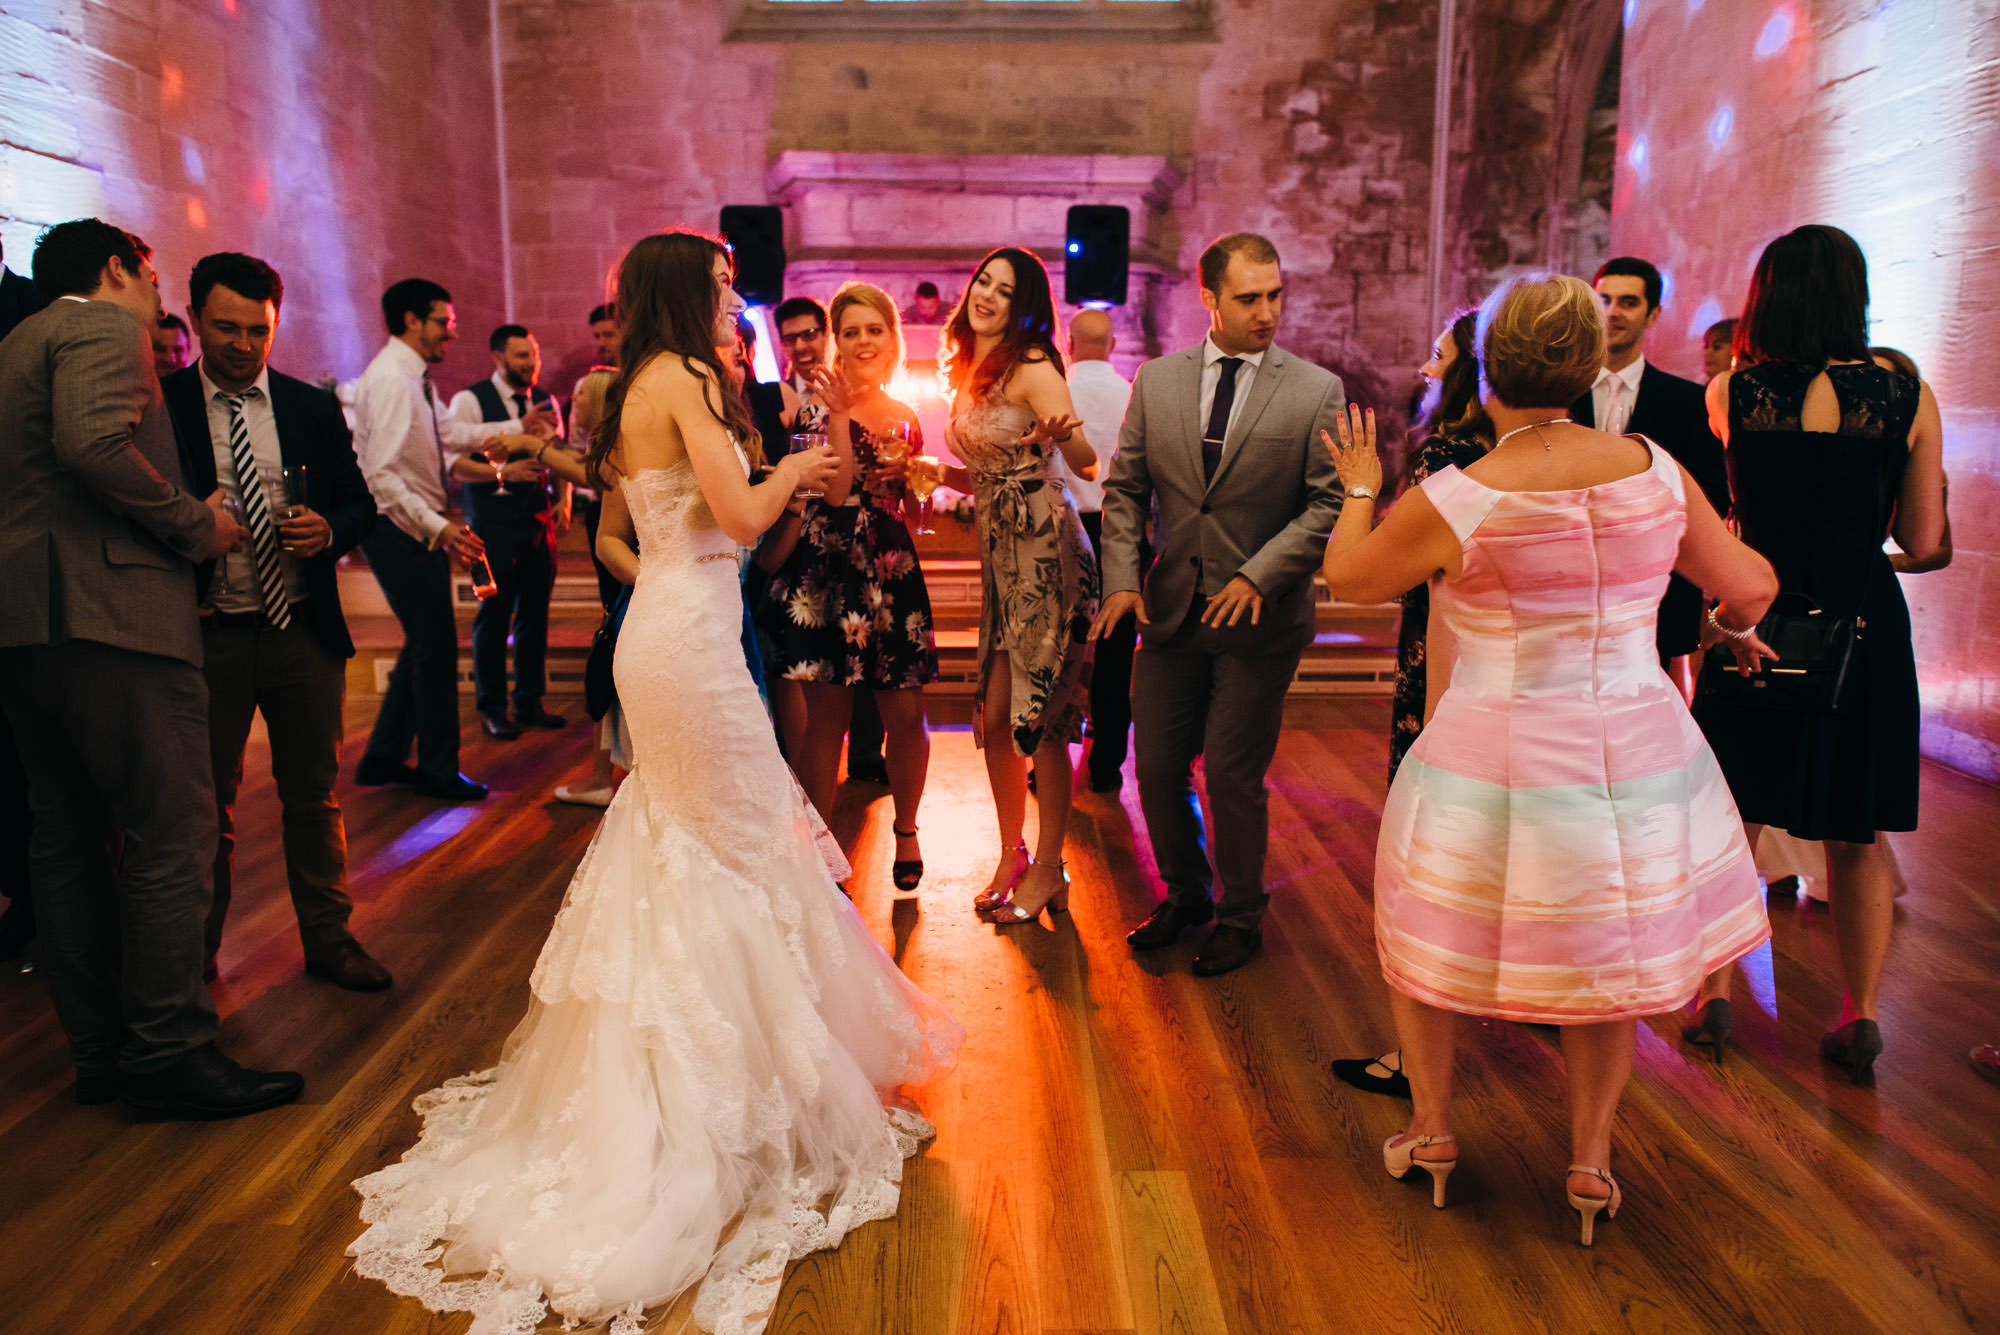 St donats castle wedding dancing